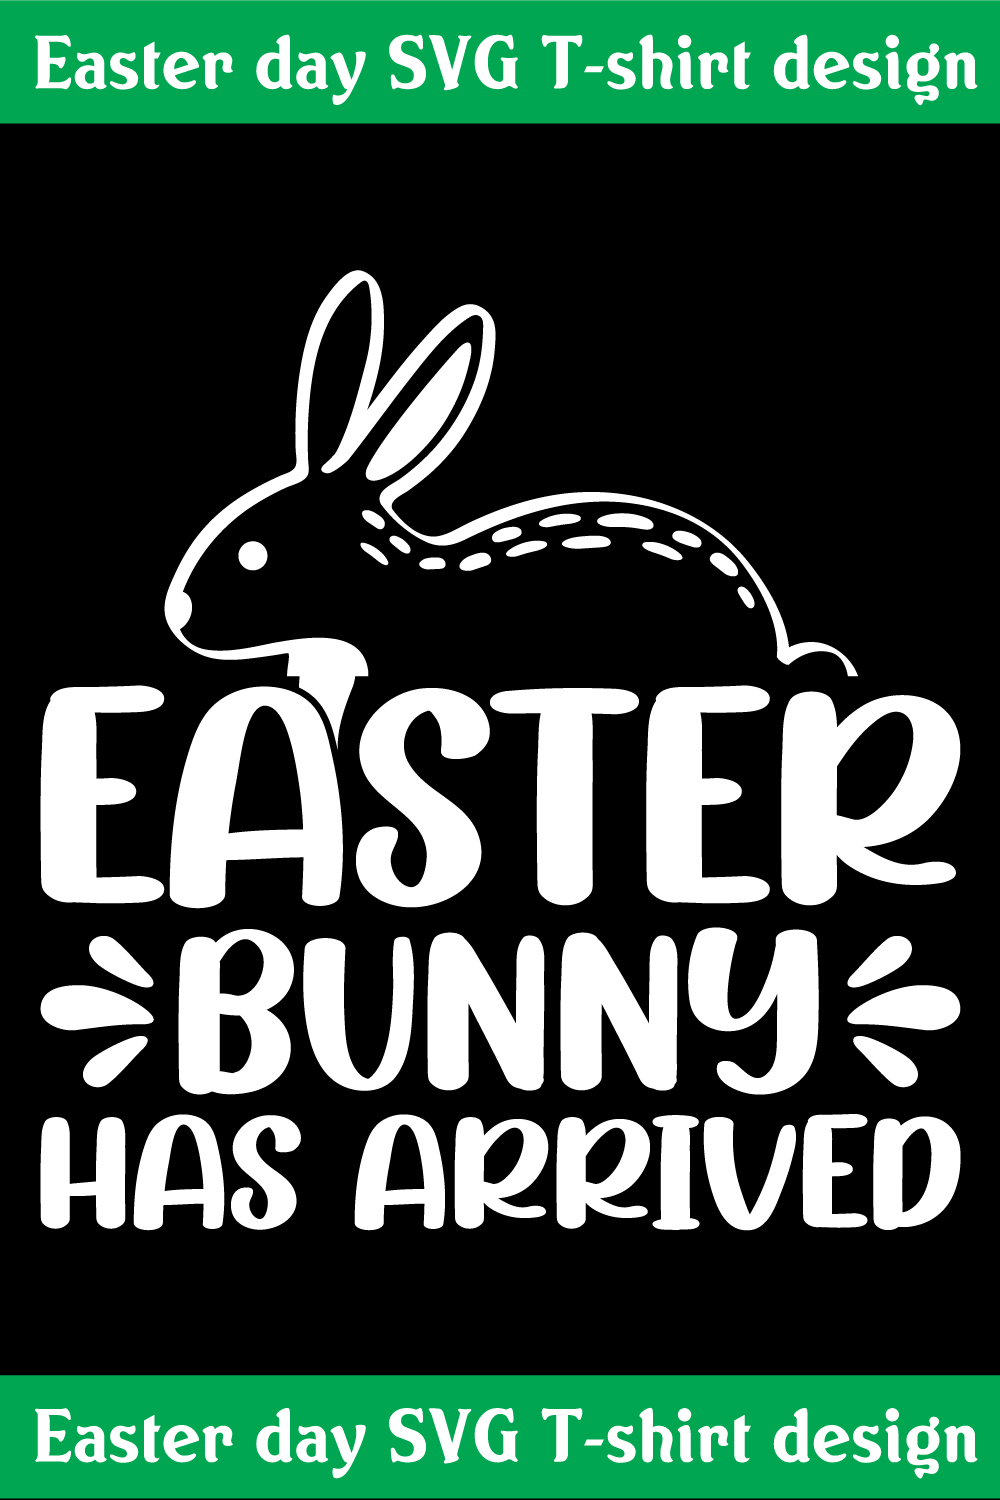 Easter bunny has arrived SVG T-shirt design pinterest preview image.